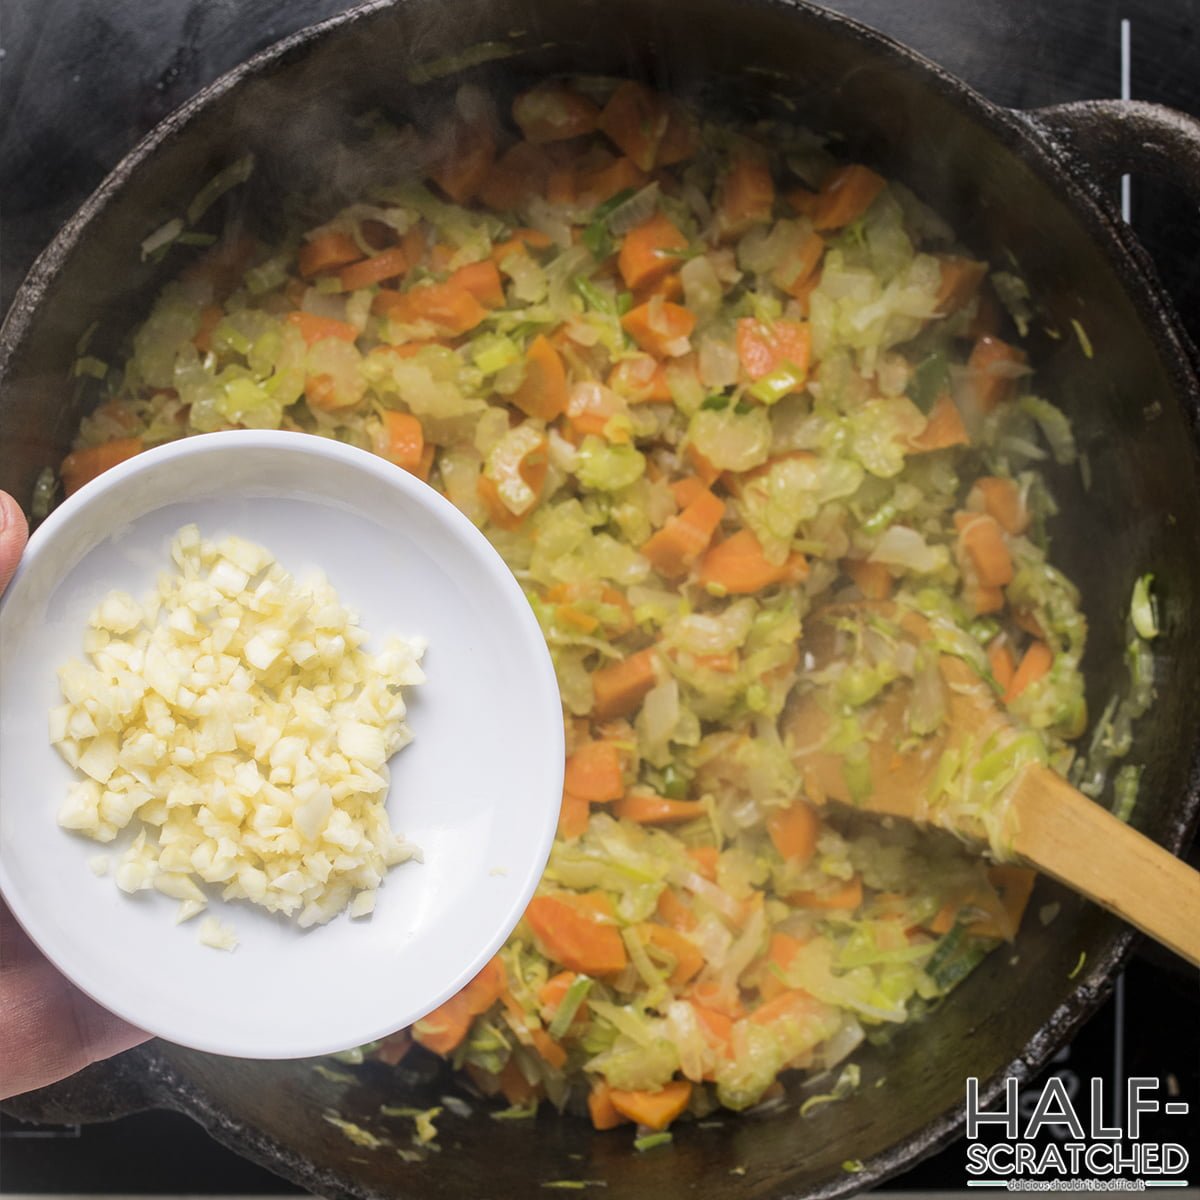 Adding garlic to vegetables